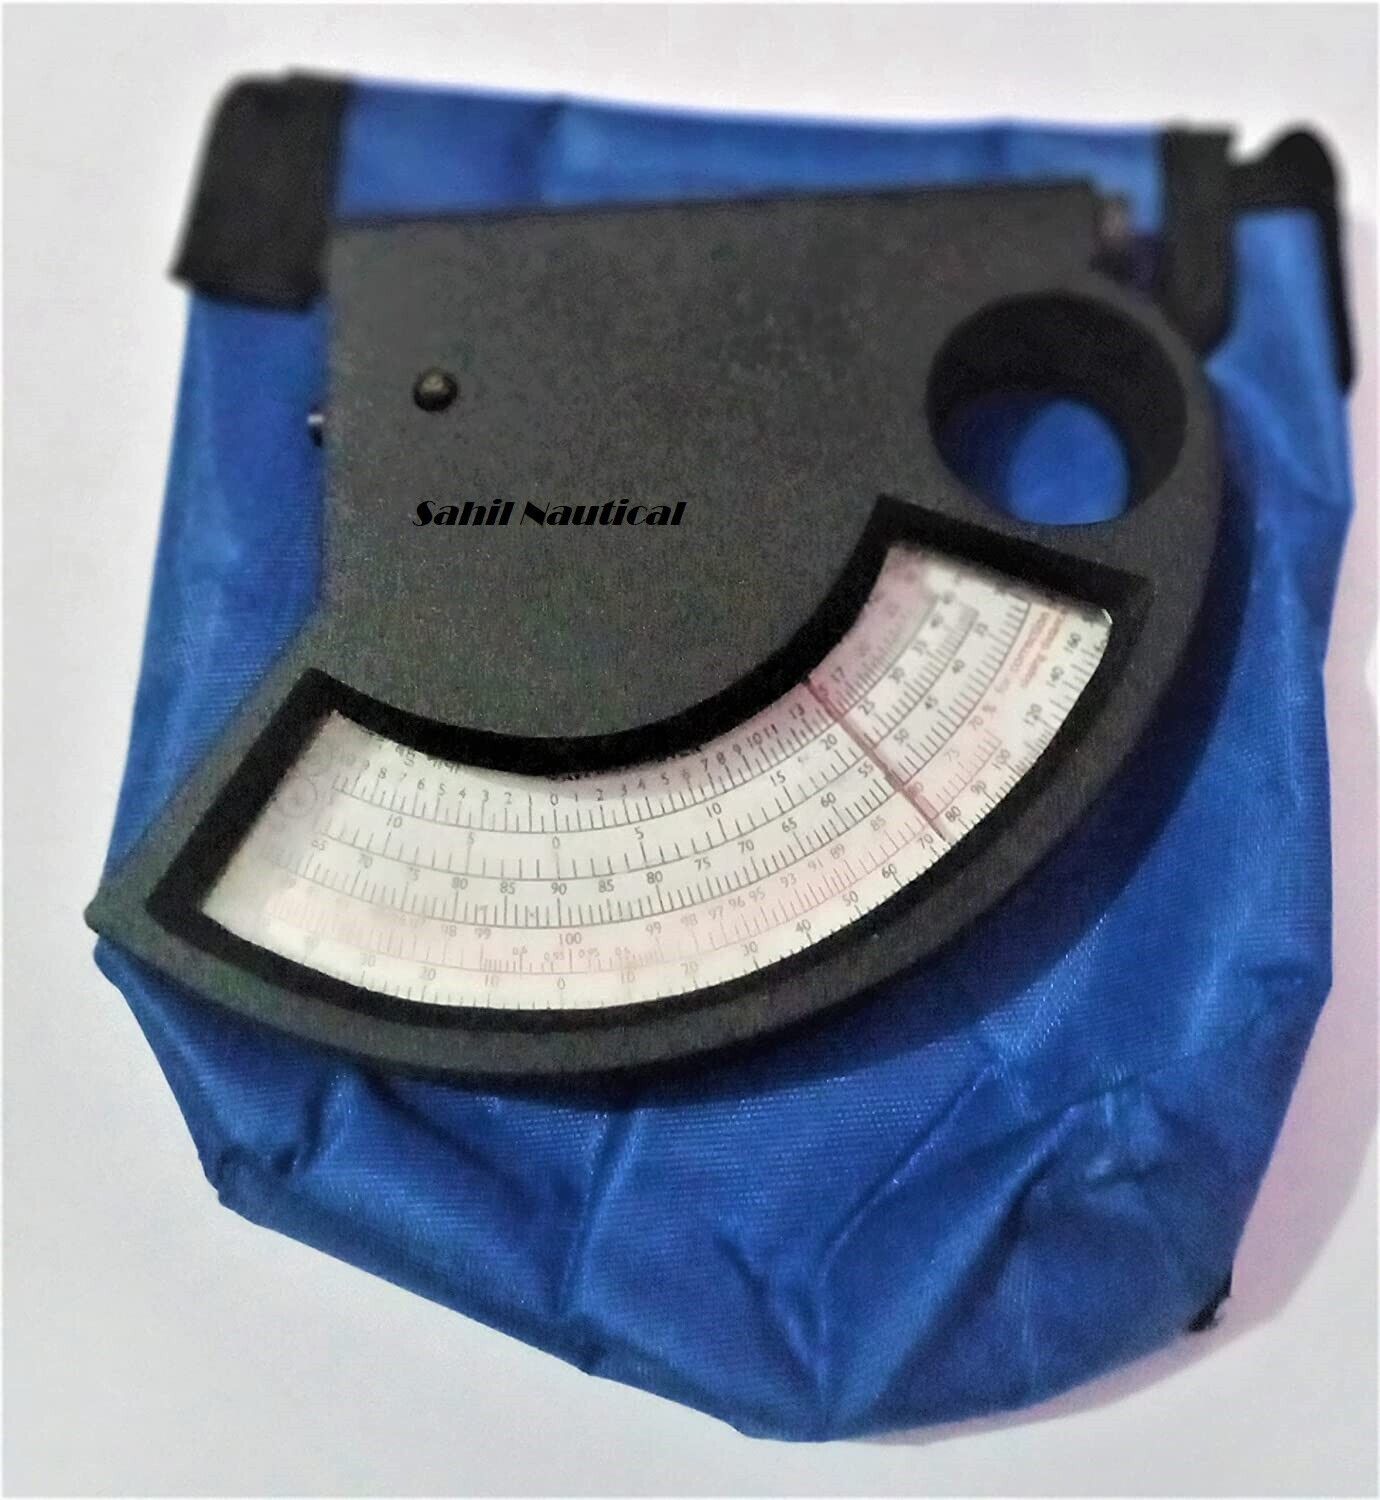 Haga Altimeter - Altimeter Survey with cover